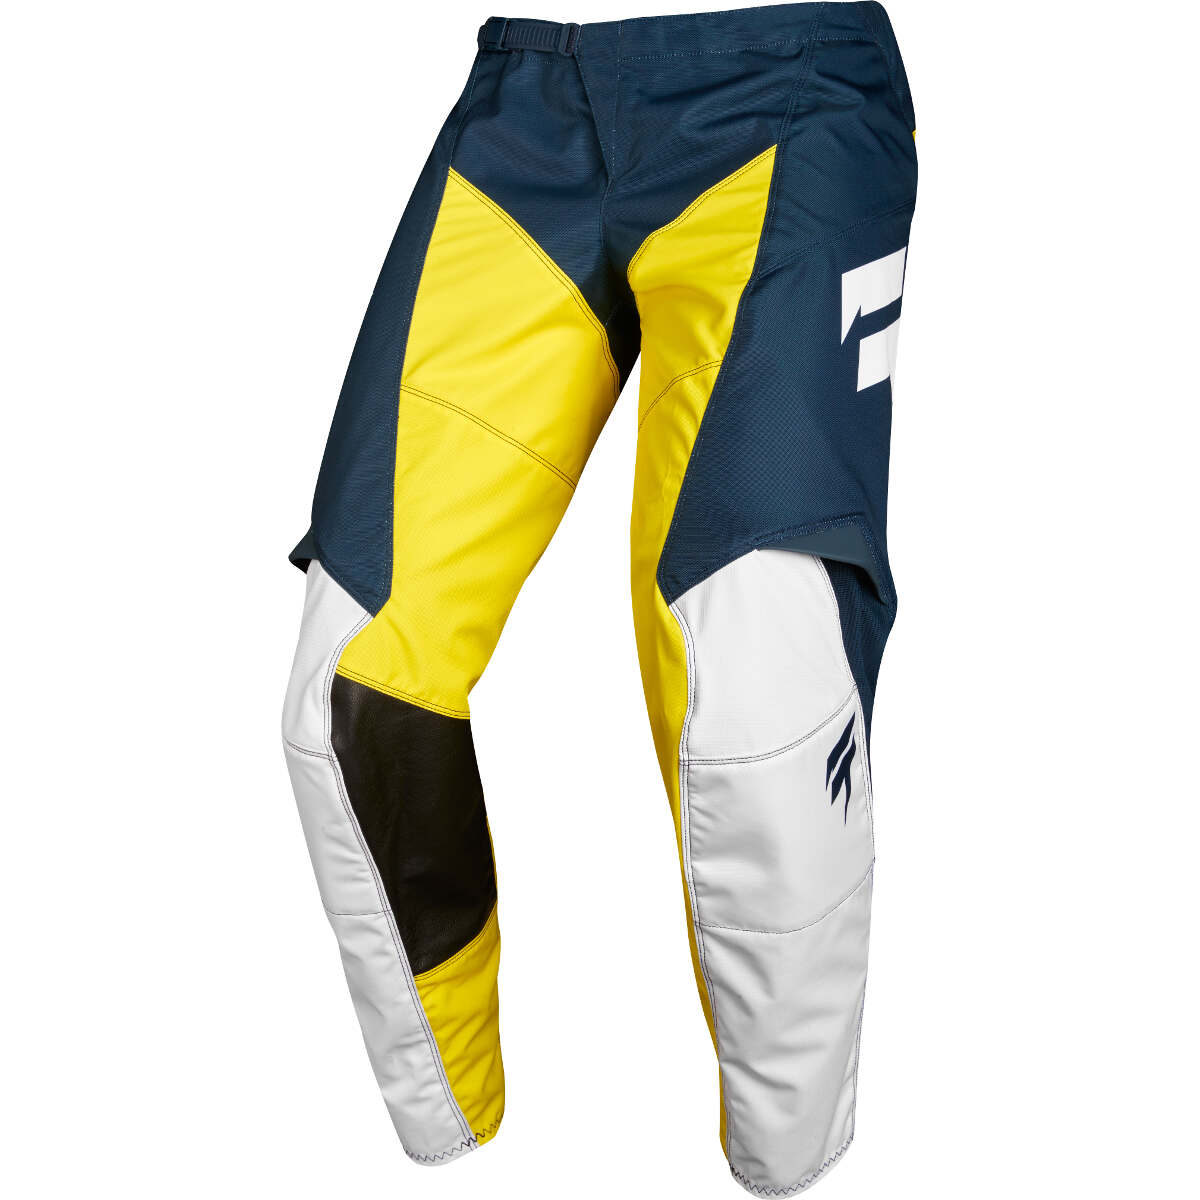 Shift Pantalon MX Whit3 Label Navy/Yellow - Limited Edition GP